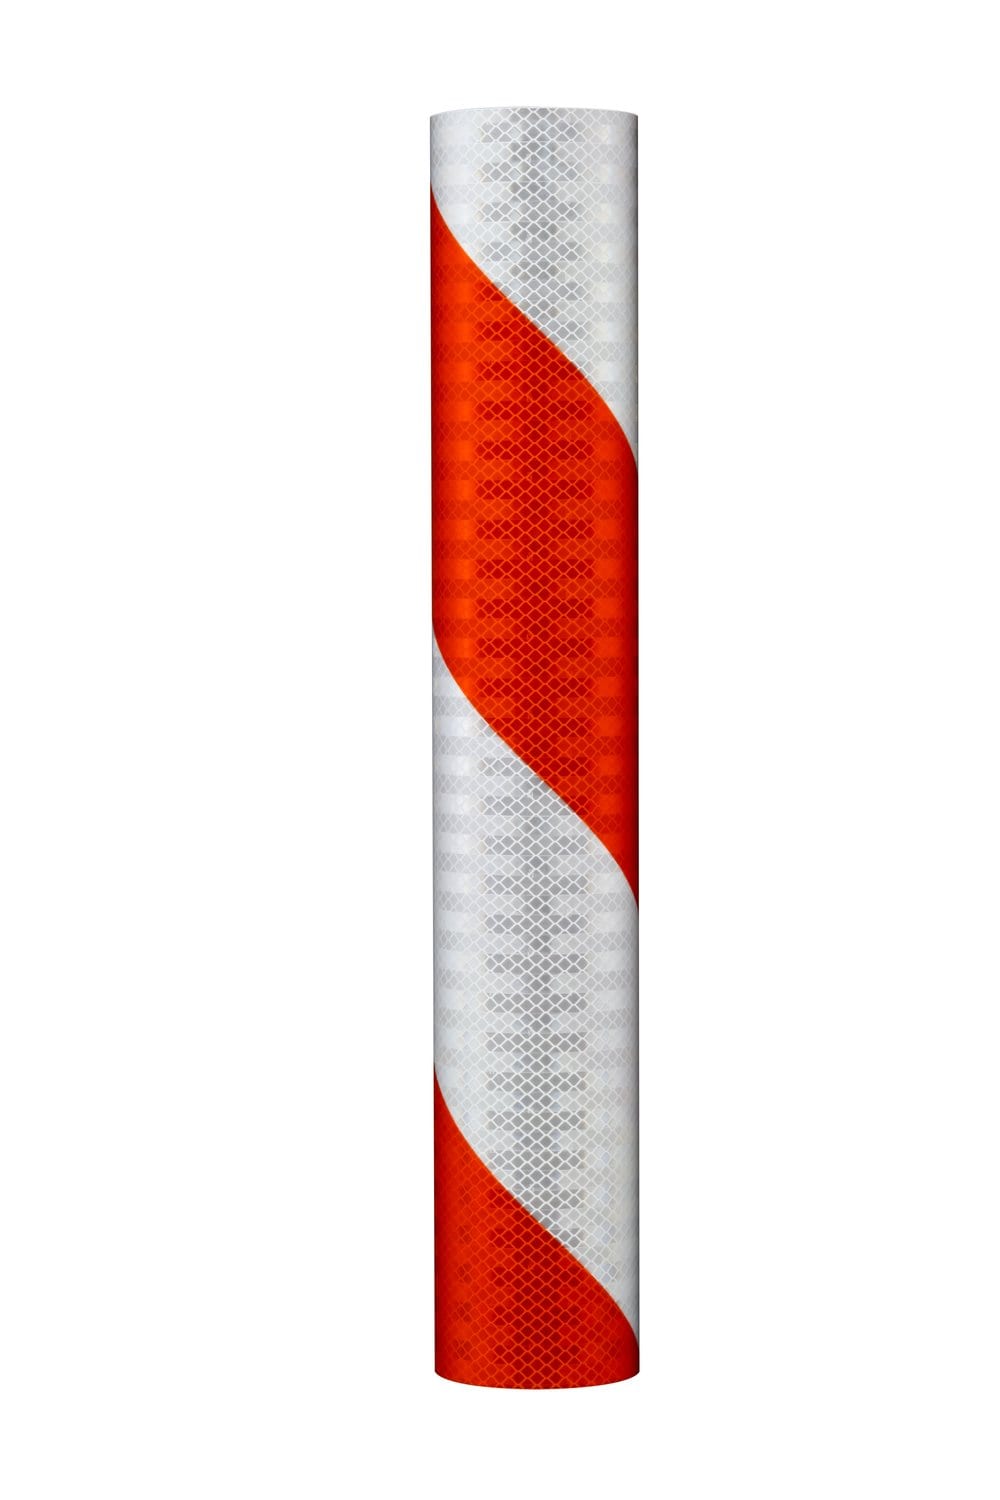 7010345247 - 3M Flexible Prismatic Reflective Barricade Sheeting 3334L Orange/White,
4 in stripe/left, 8 in x 100 yd